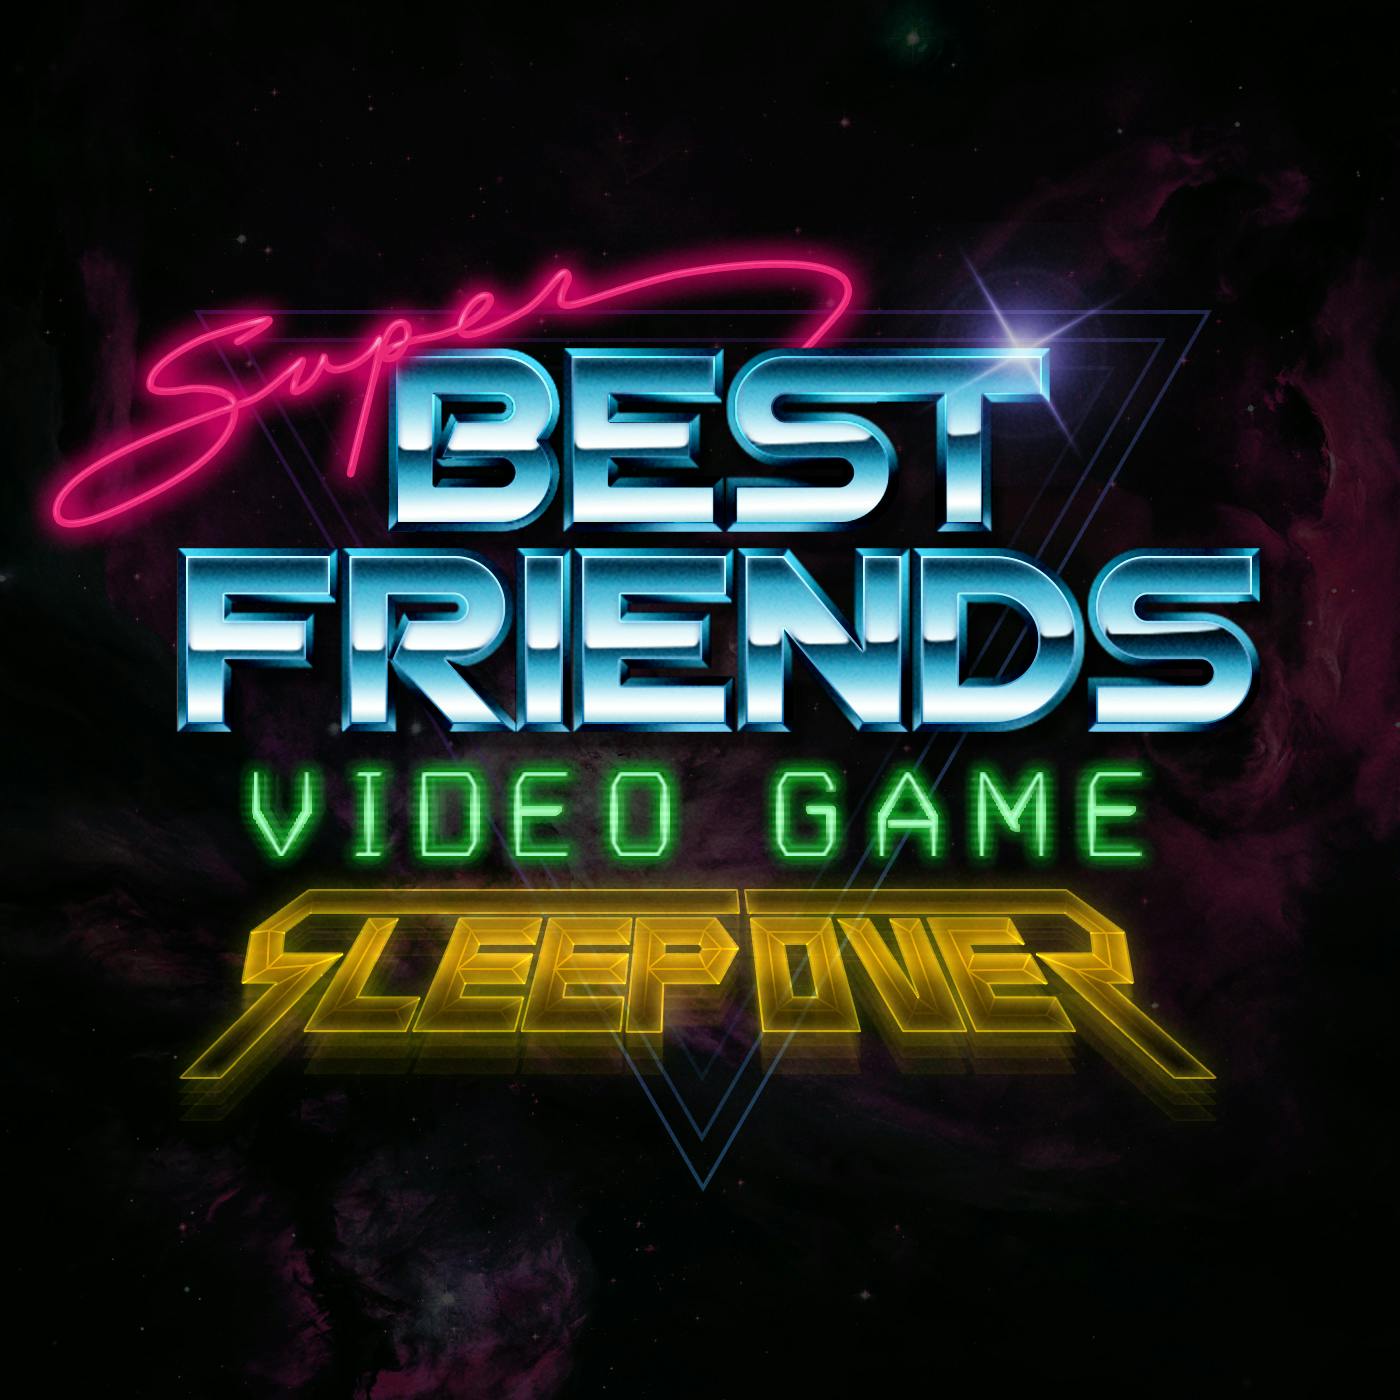 Super Best Friends Video Game Sleepover - Episode 35